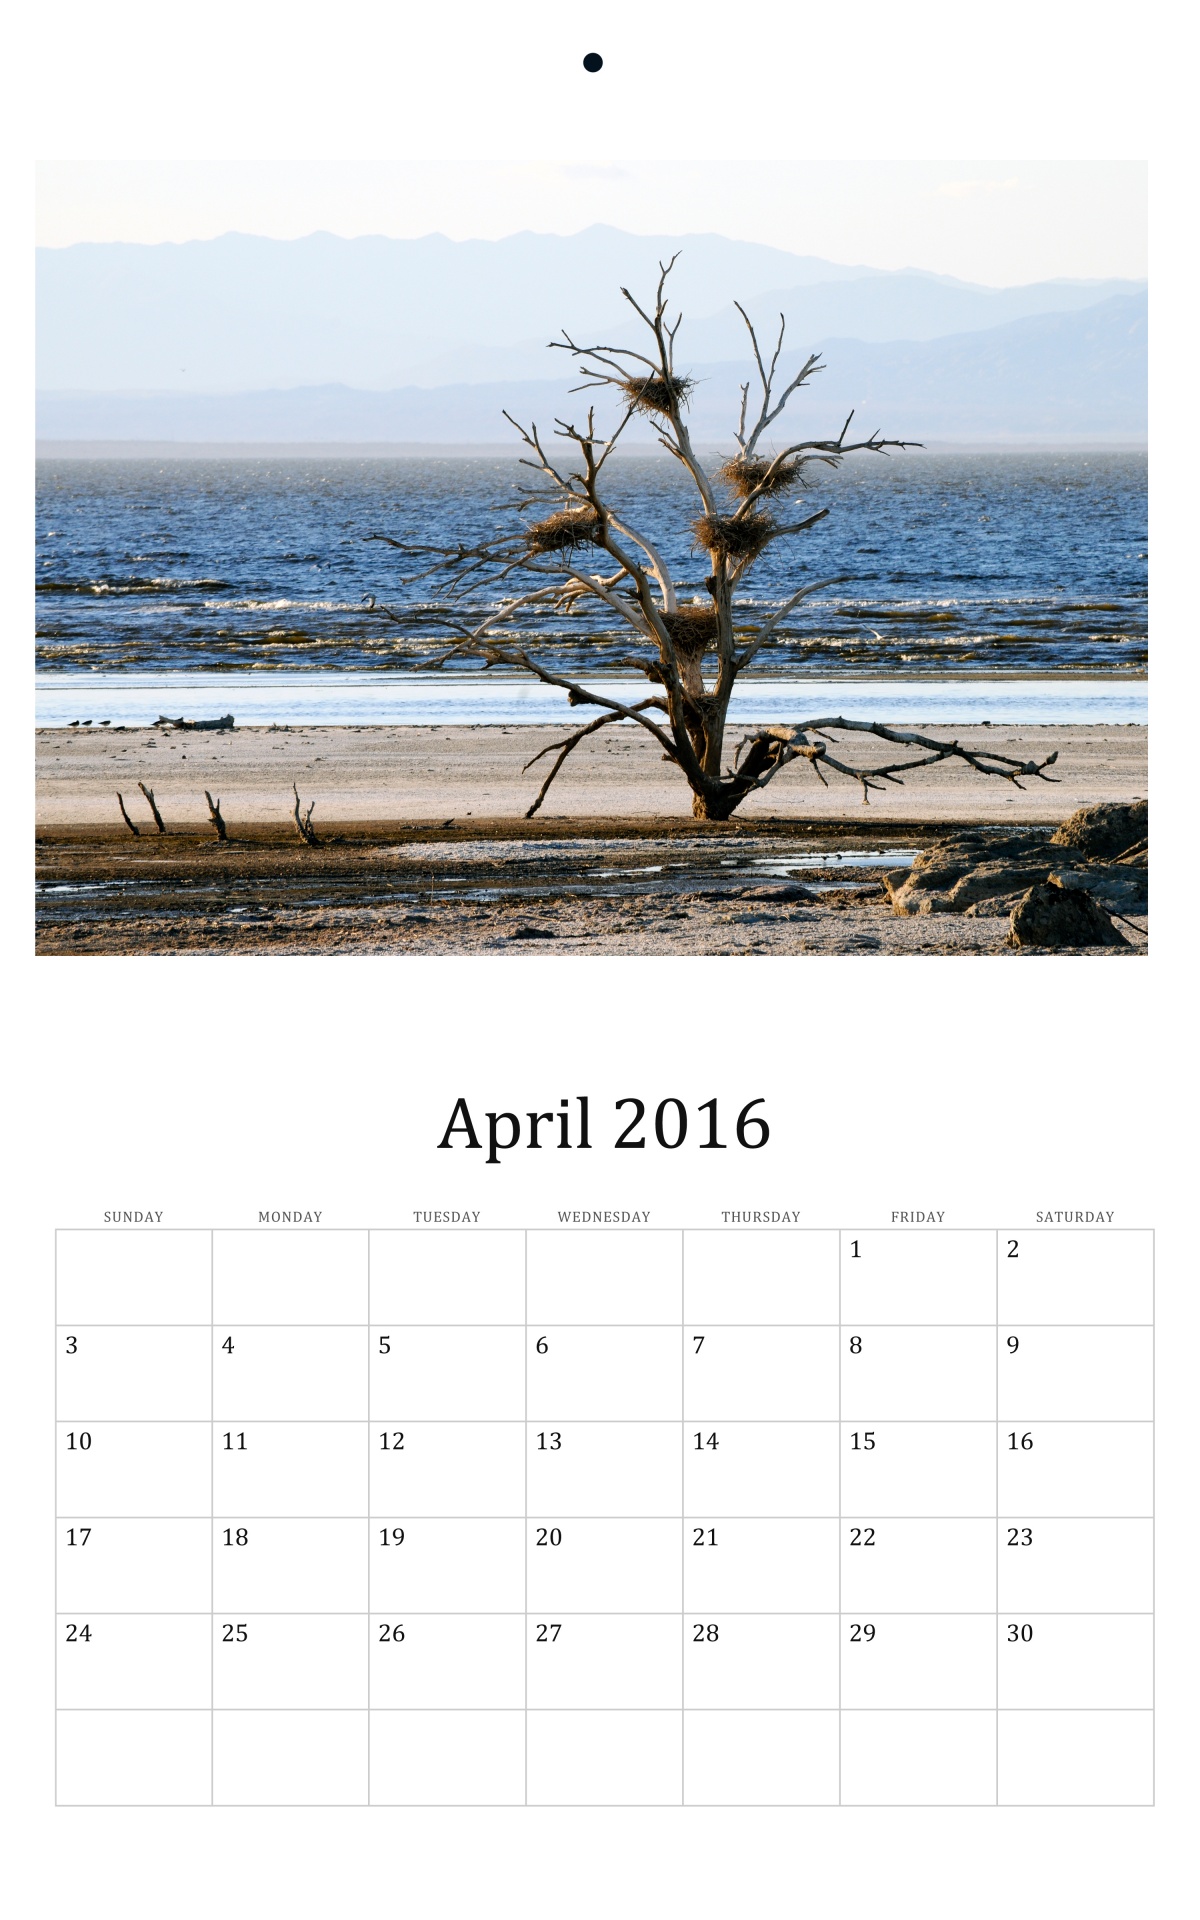 April 2016 Wall Calendar Free Stock Photo Public Domain Pictures